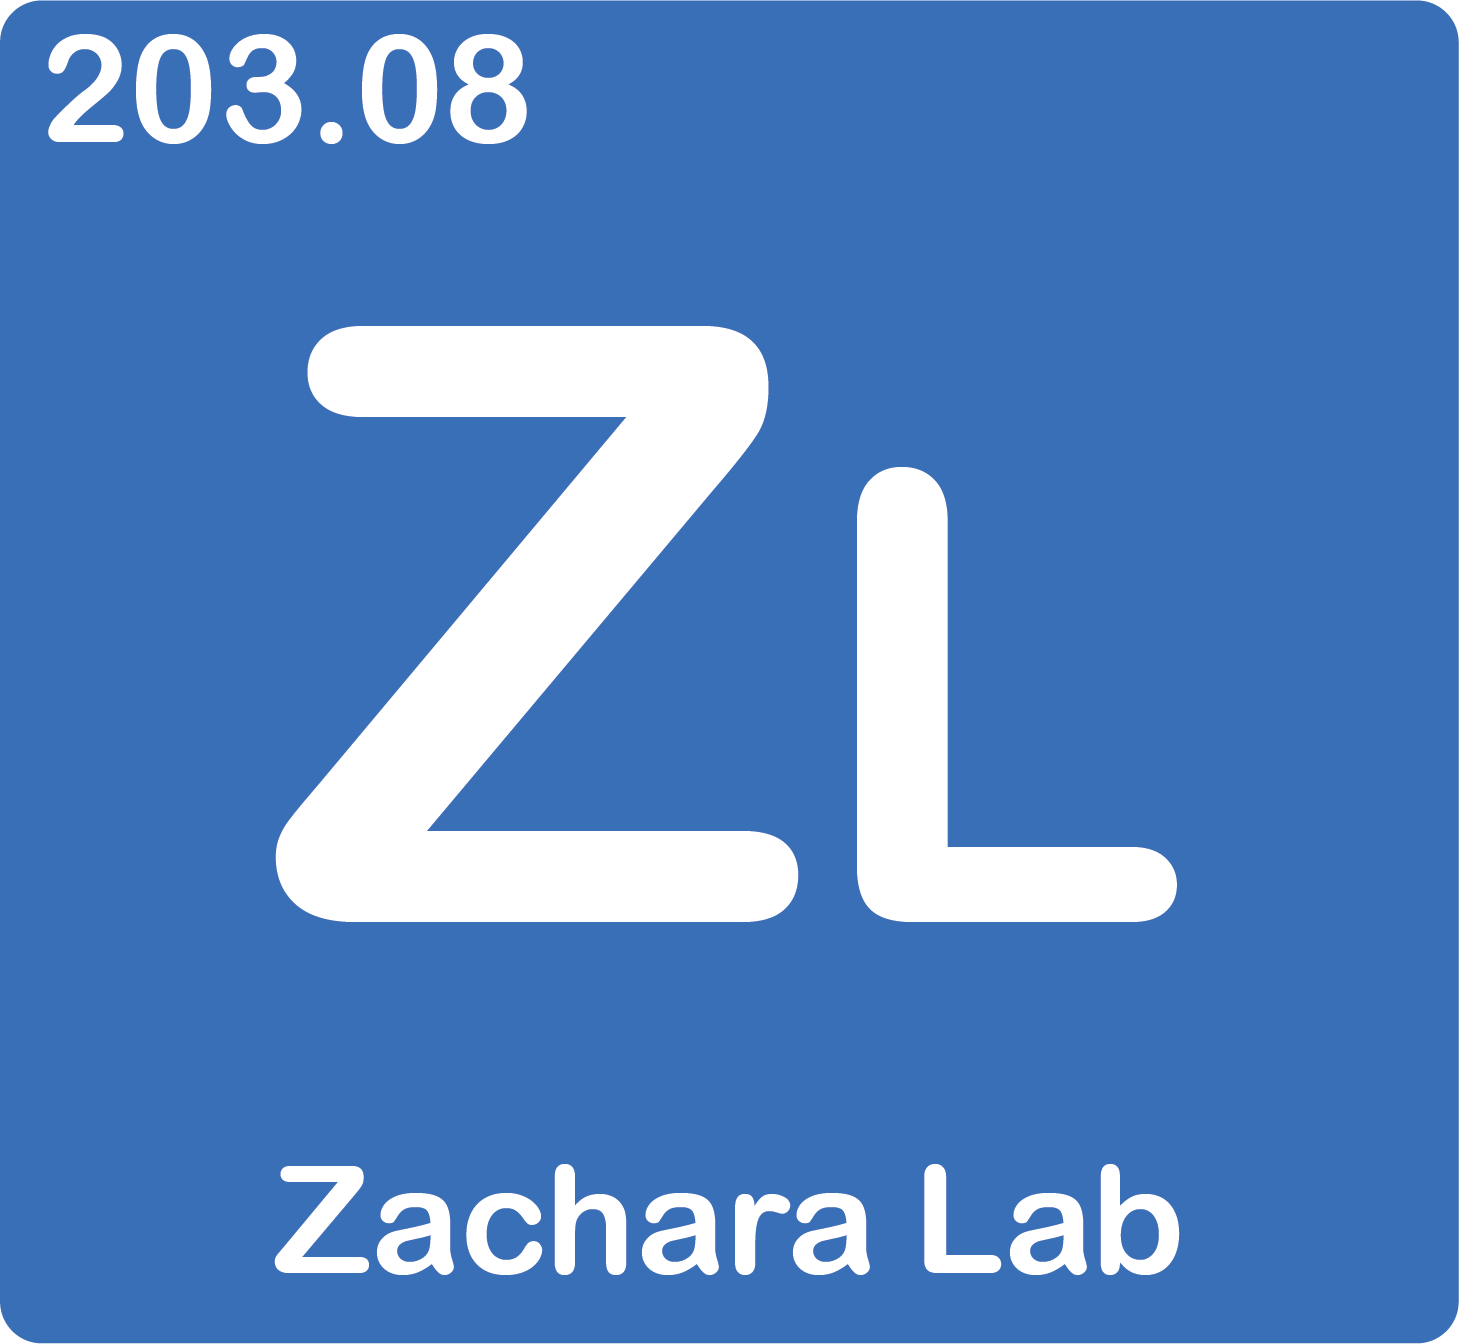 The Zachara Lab